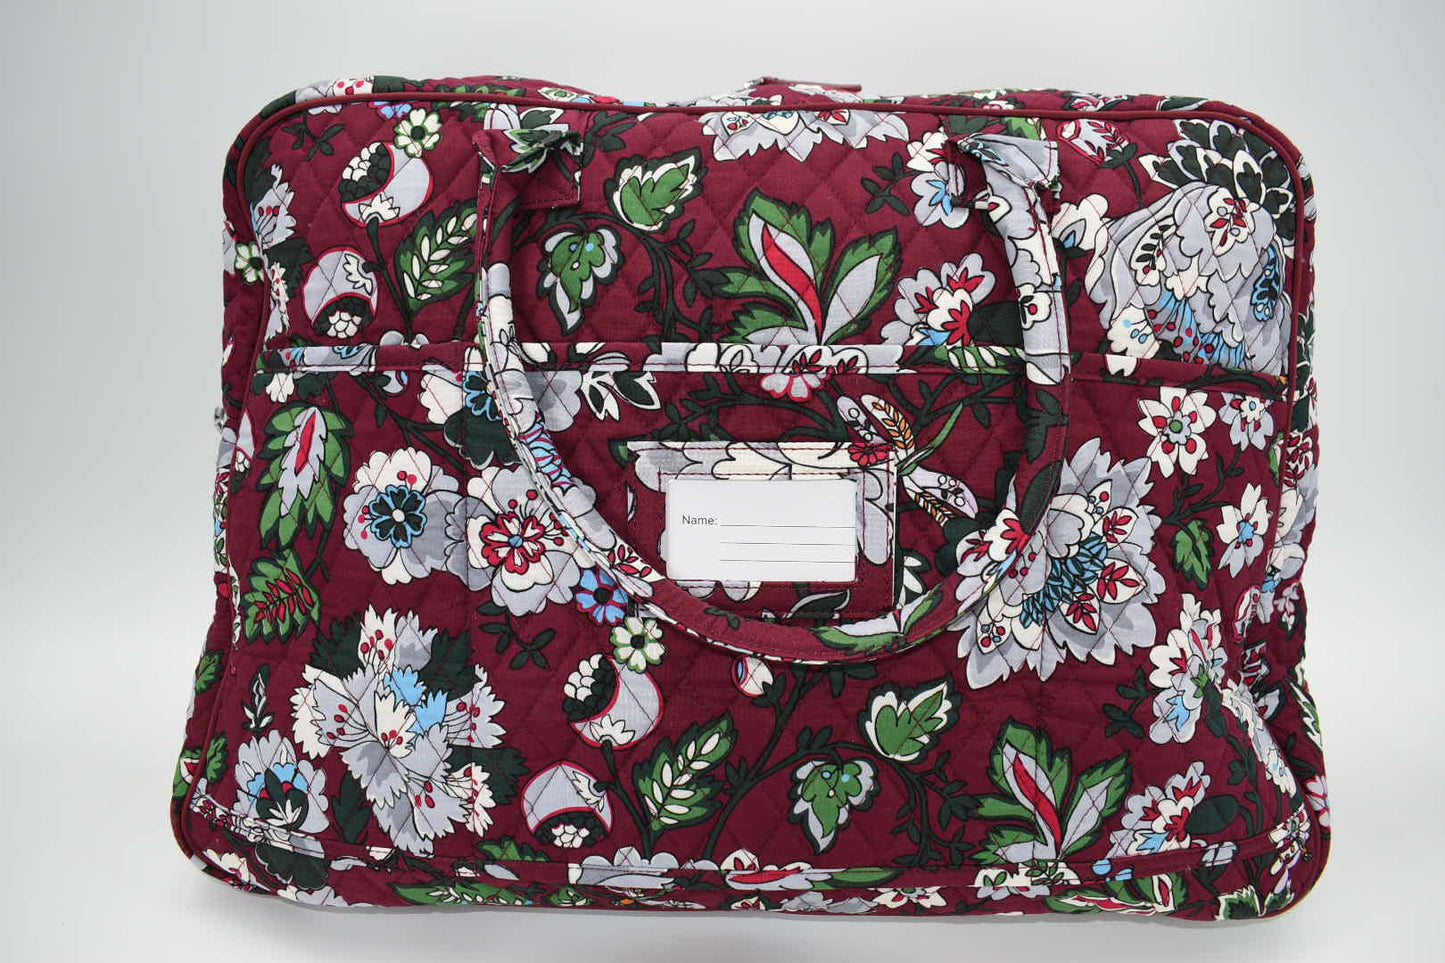 Vera Bradley Grand Traveler Bag in "Bordeaux Blooms" Pattern